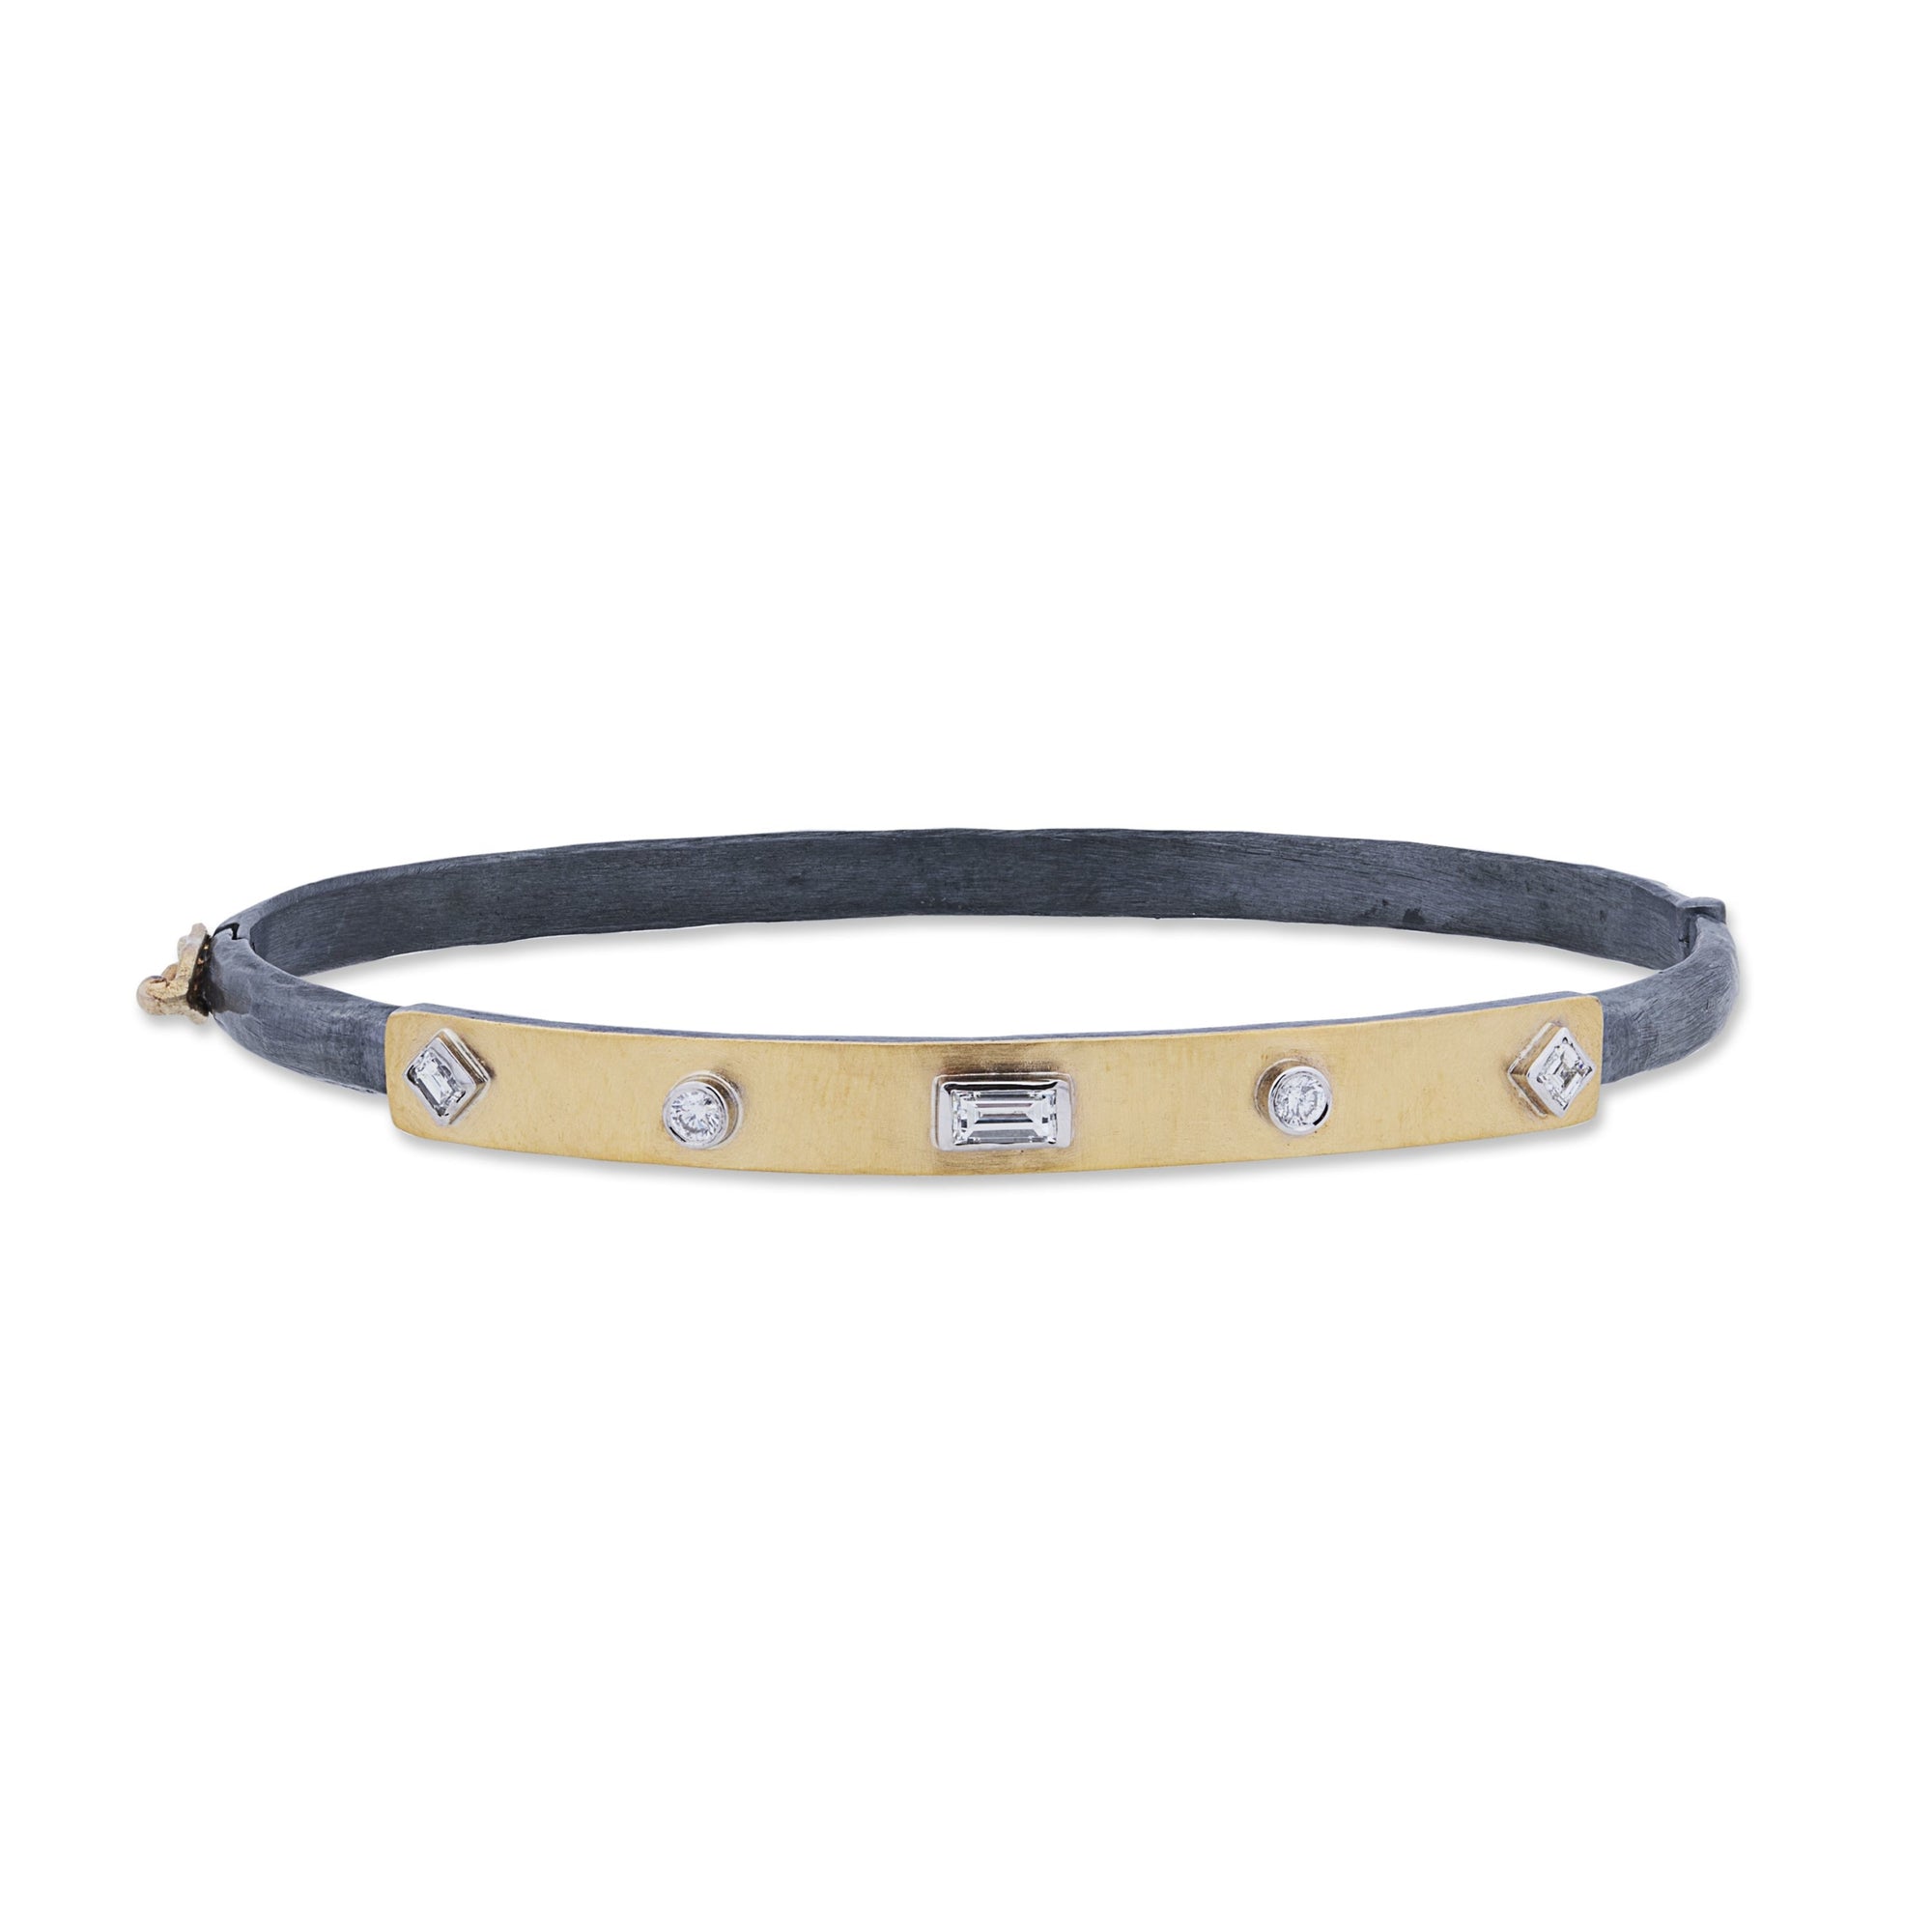 Lika Behar 24K Fusion Gold & Oxidized Silver "Stockholm New” Bracelet